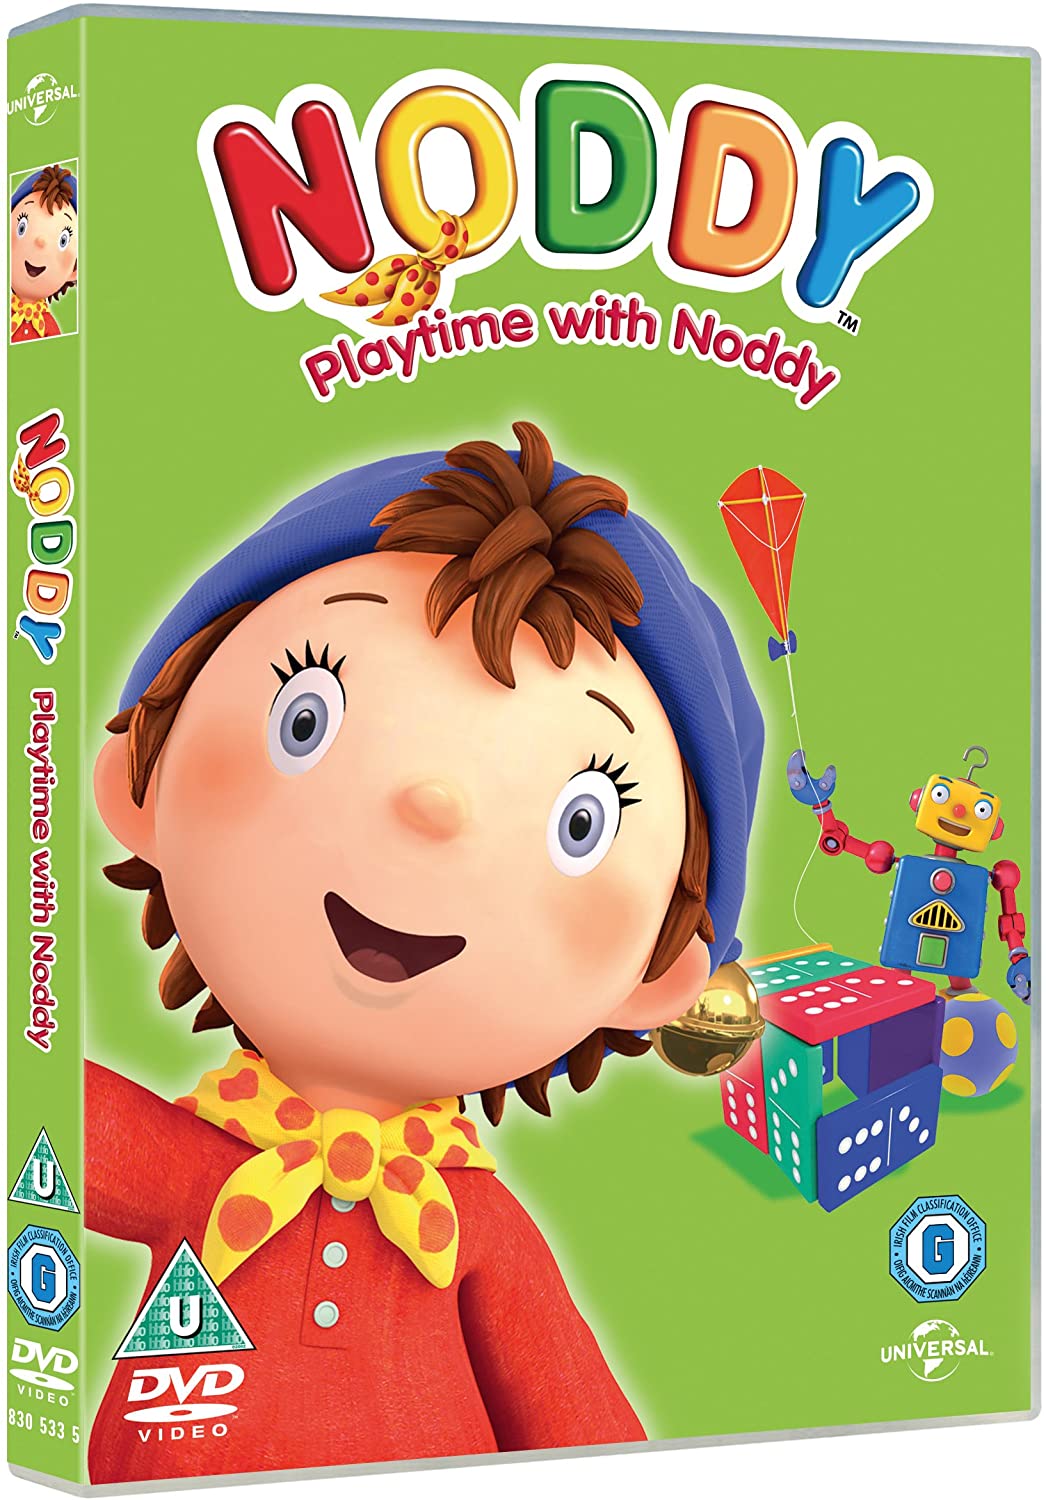 Noddy in Toyland - Playtime with Noddy [2009] - Animation [DVD]